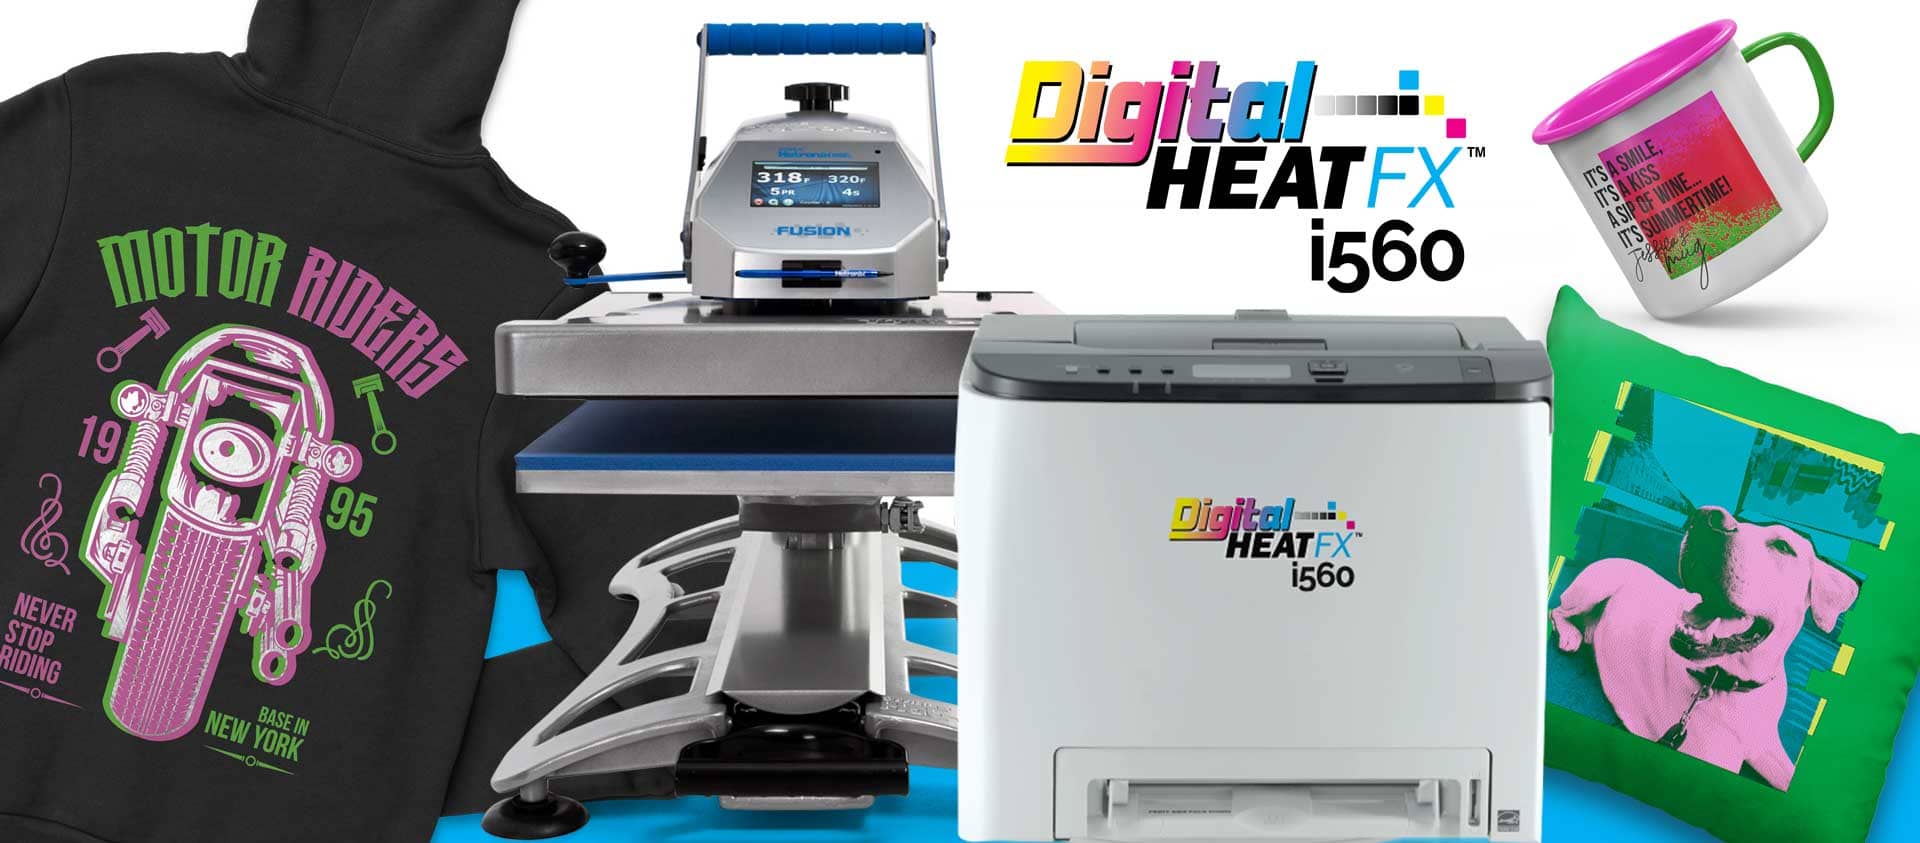 DigitalHeat FX i560 Printer - DigitalHeat FX